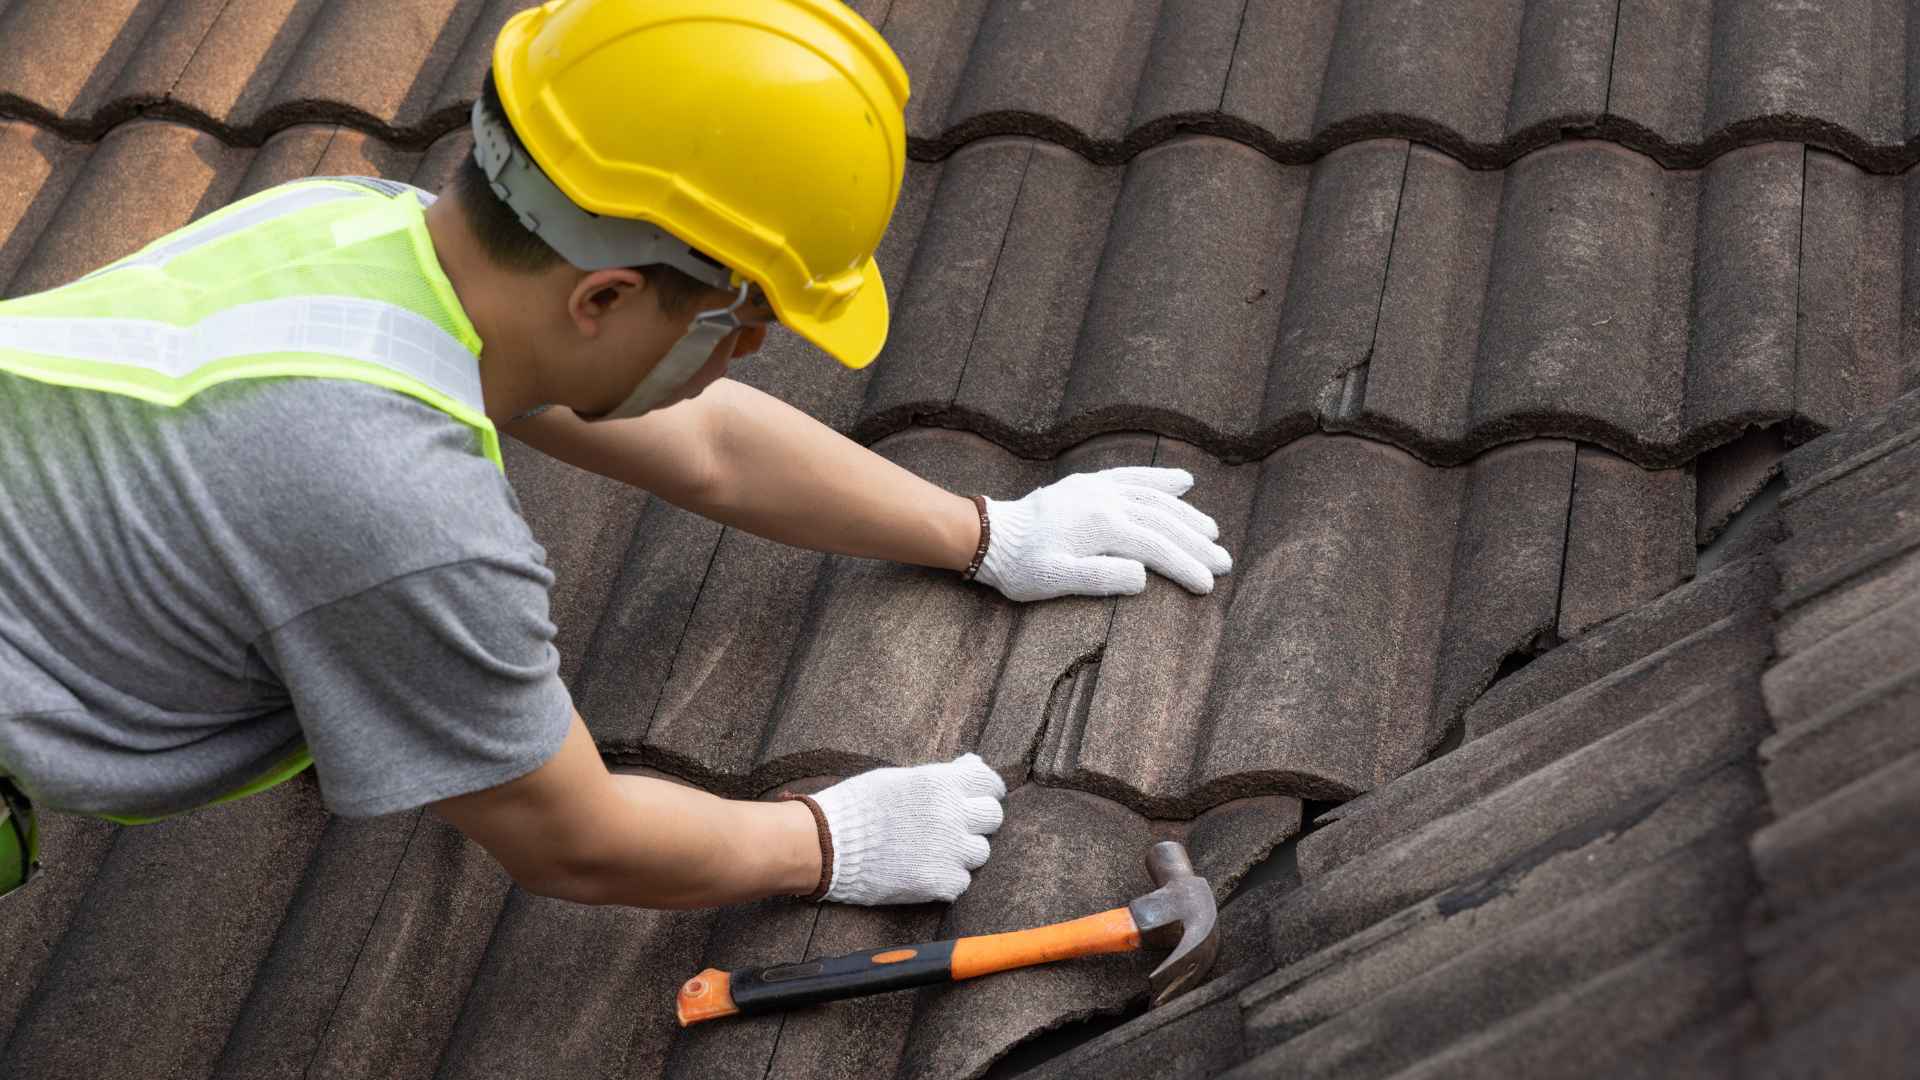 regular roof maintenance